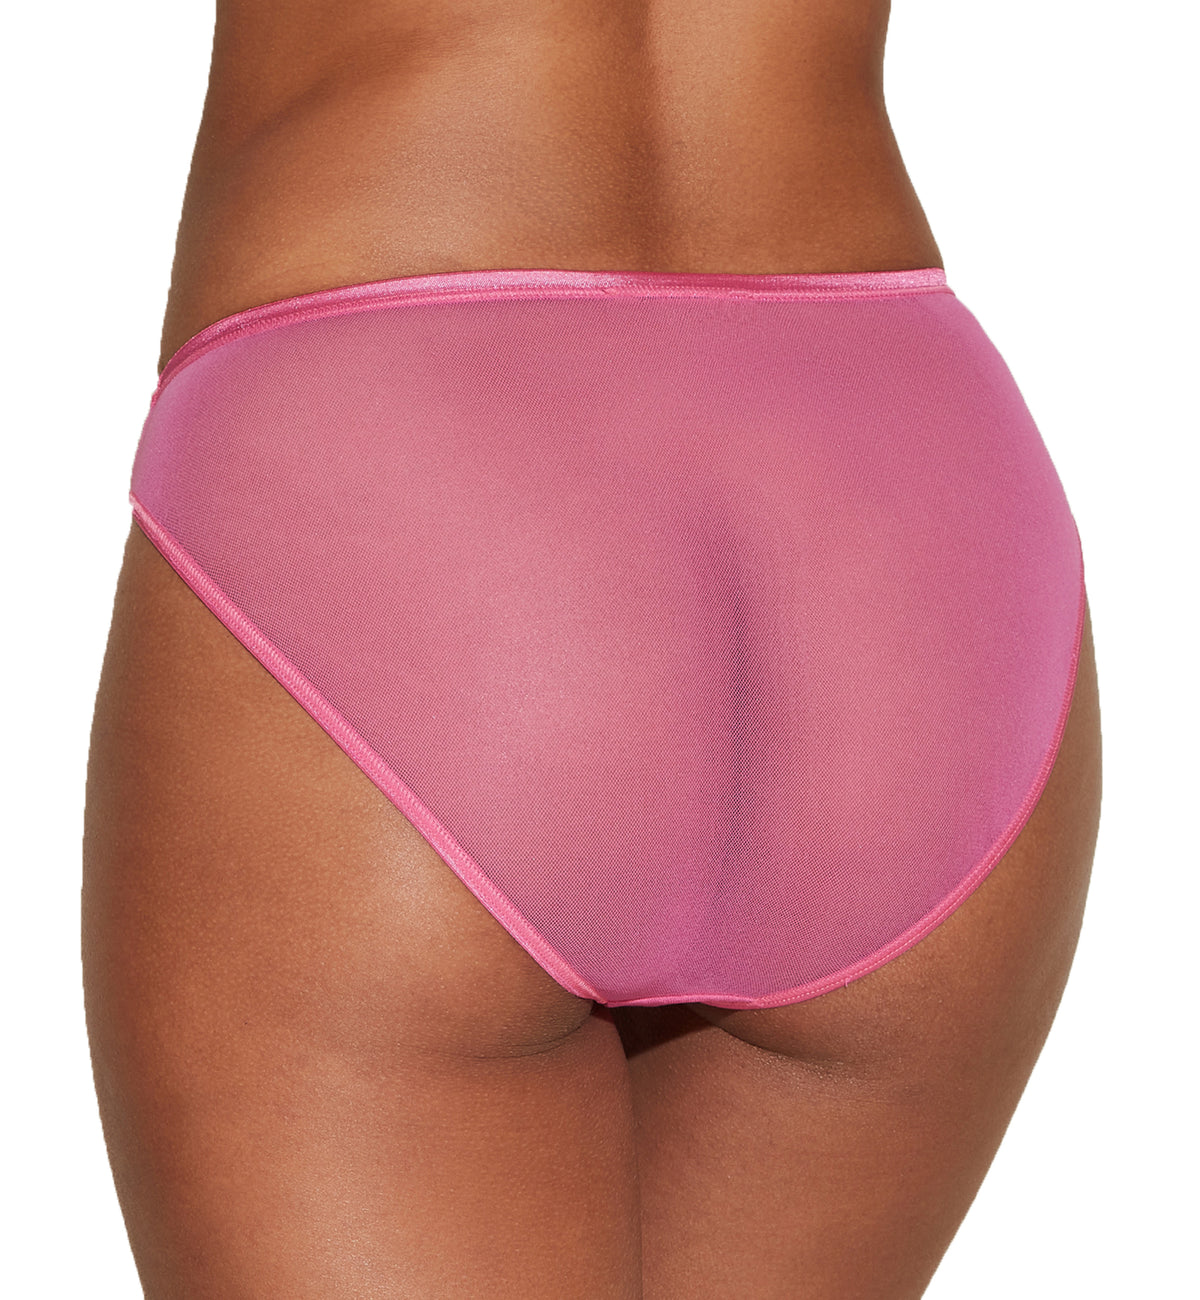 Cosabella Soire Confidence High Waist Bikini Panty (SOIRC0561),Small,Rani Pink - Rani Pink,Small